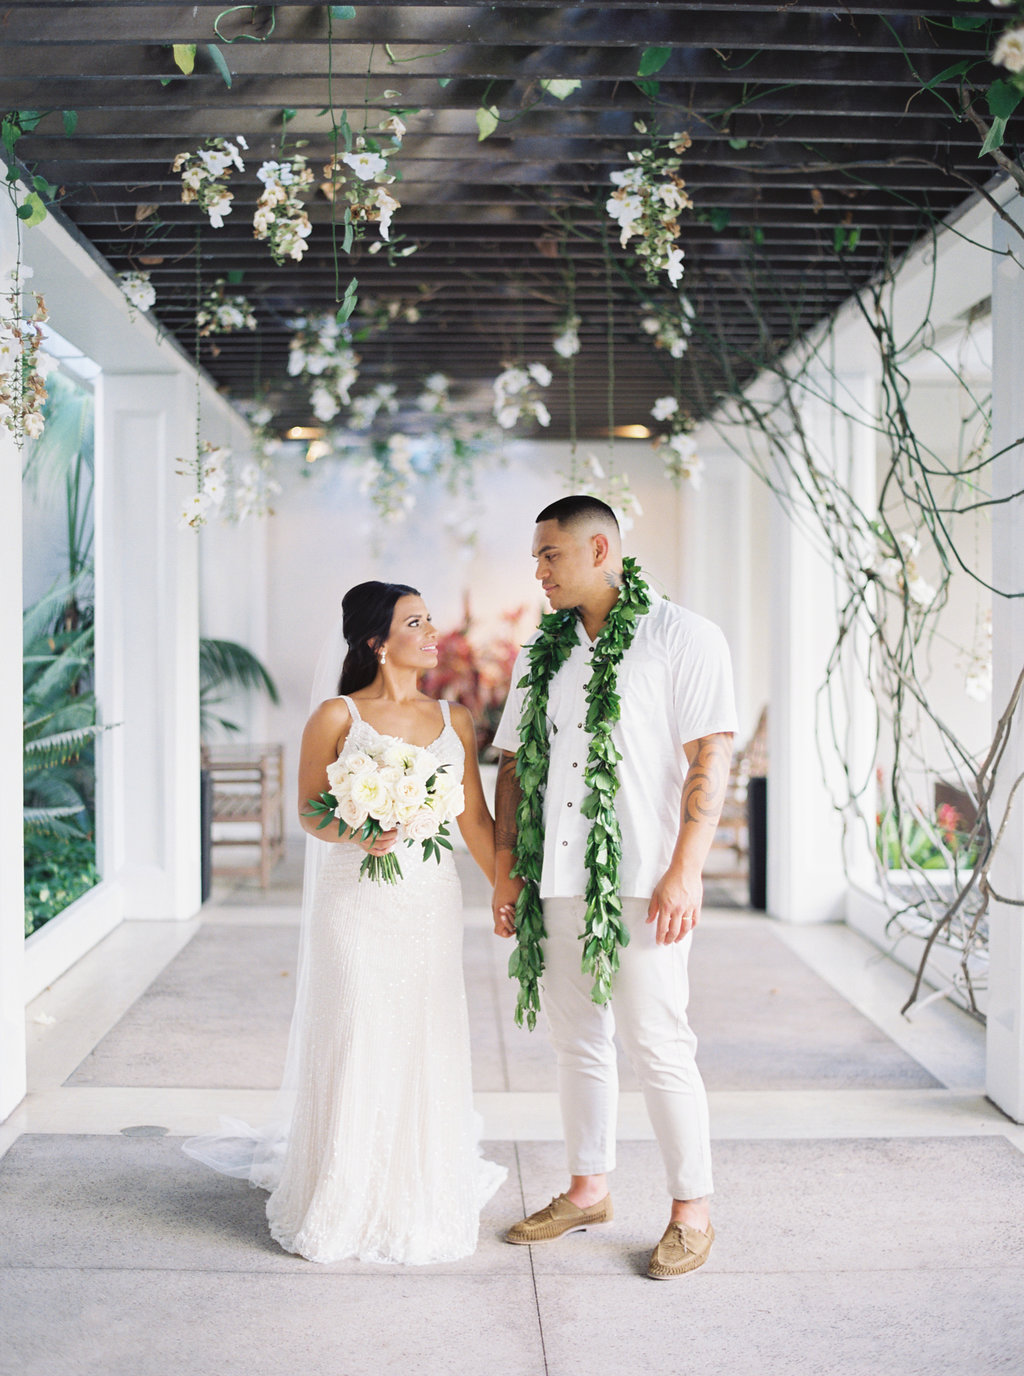 Glamorous Hawaii Wedding in Blush and Ivory - Hawaii and destination fine art wedding photographer Alice Ahn